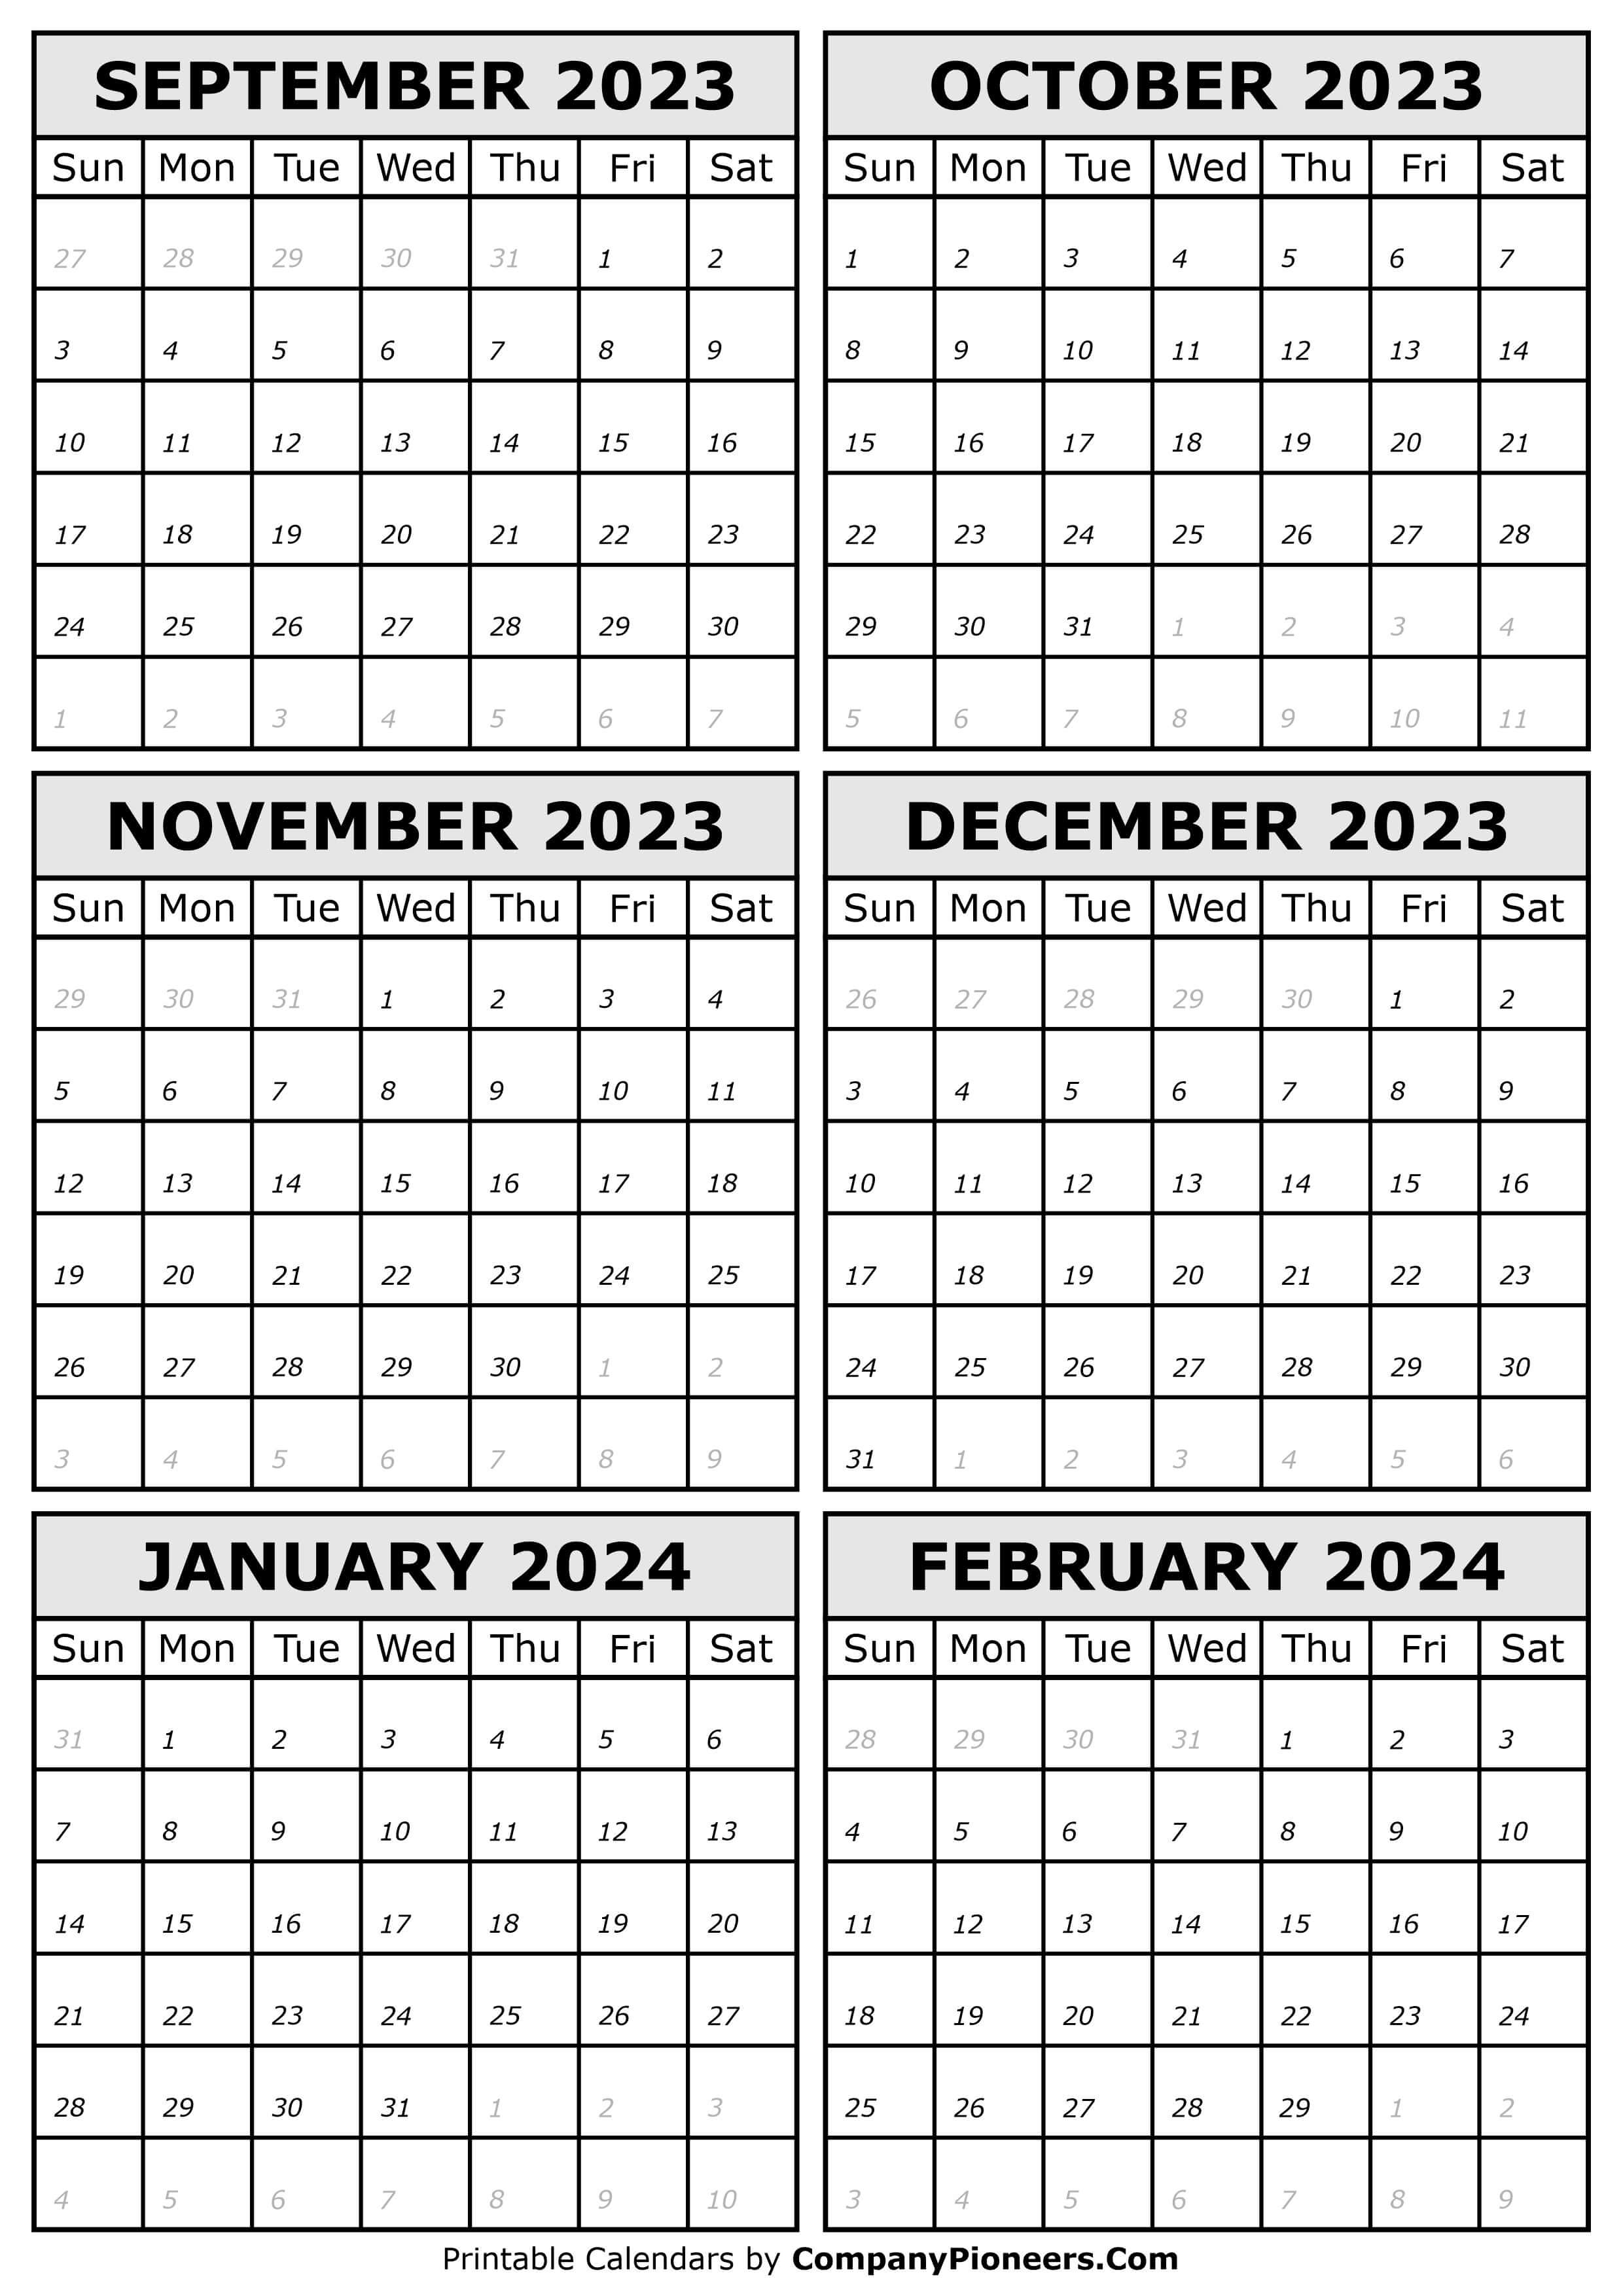 2023 September to 2024 February Calendar